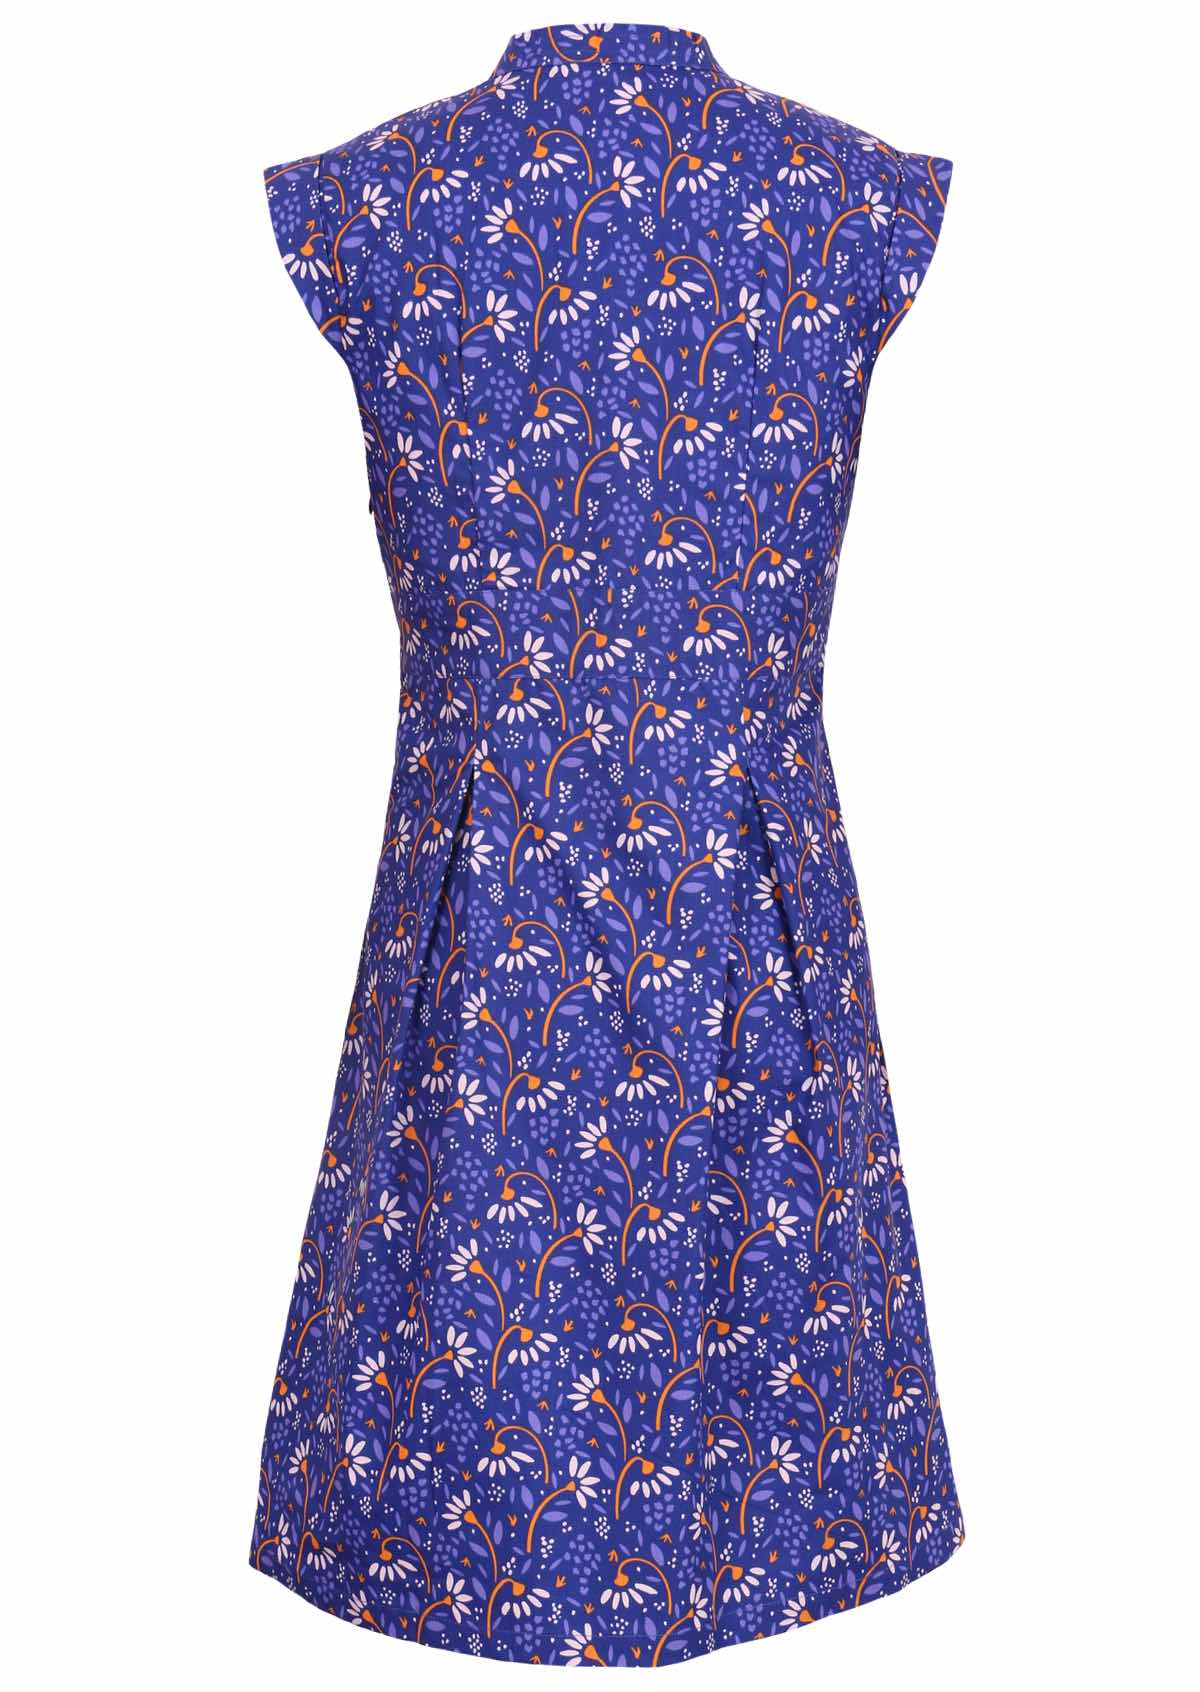 cotton dress with fun daisy print on blue base